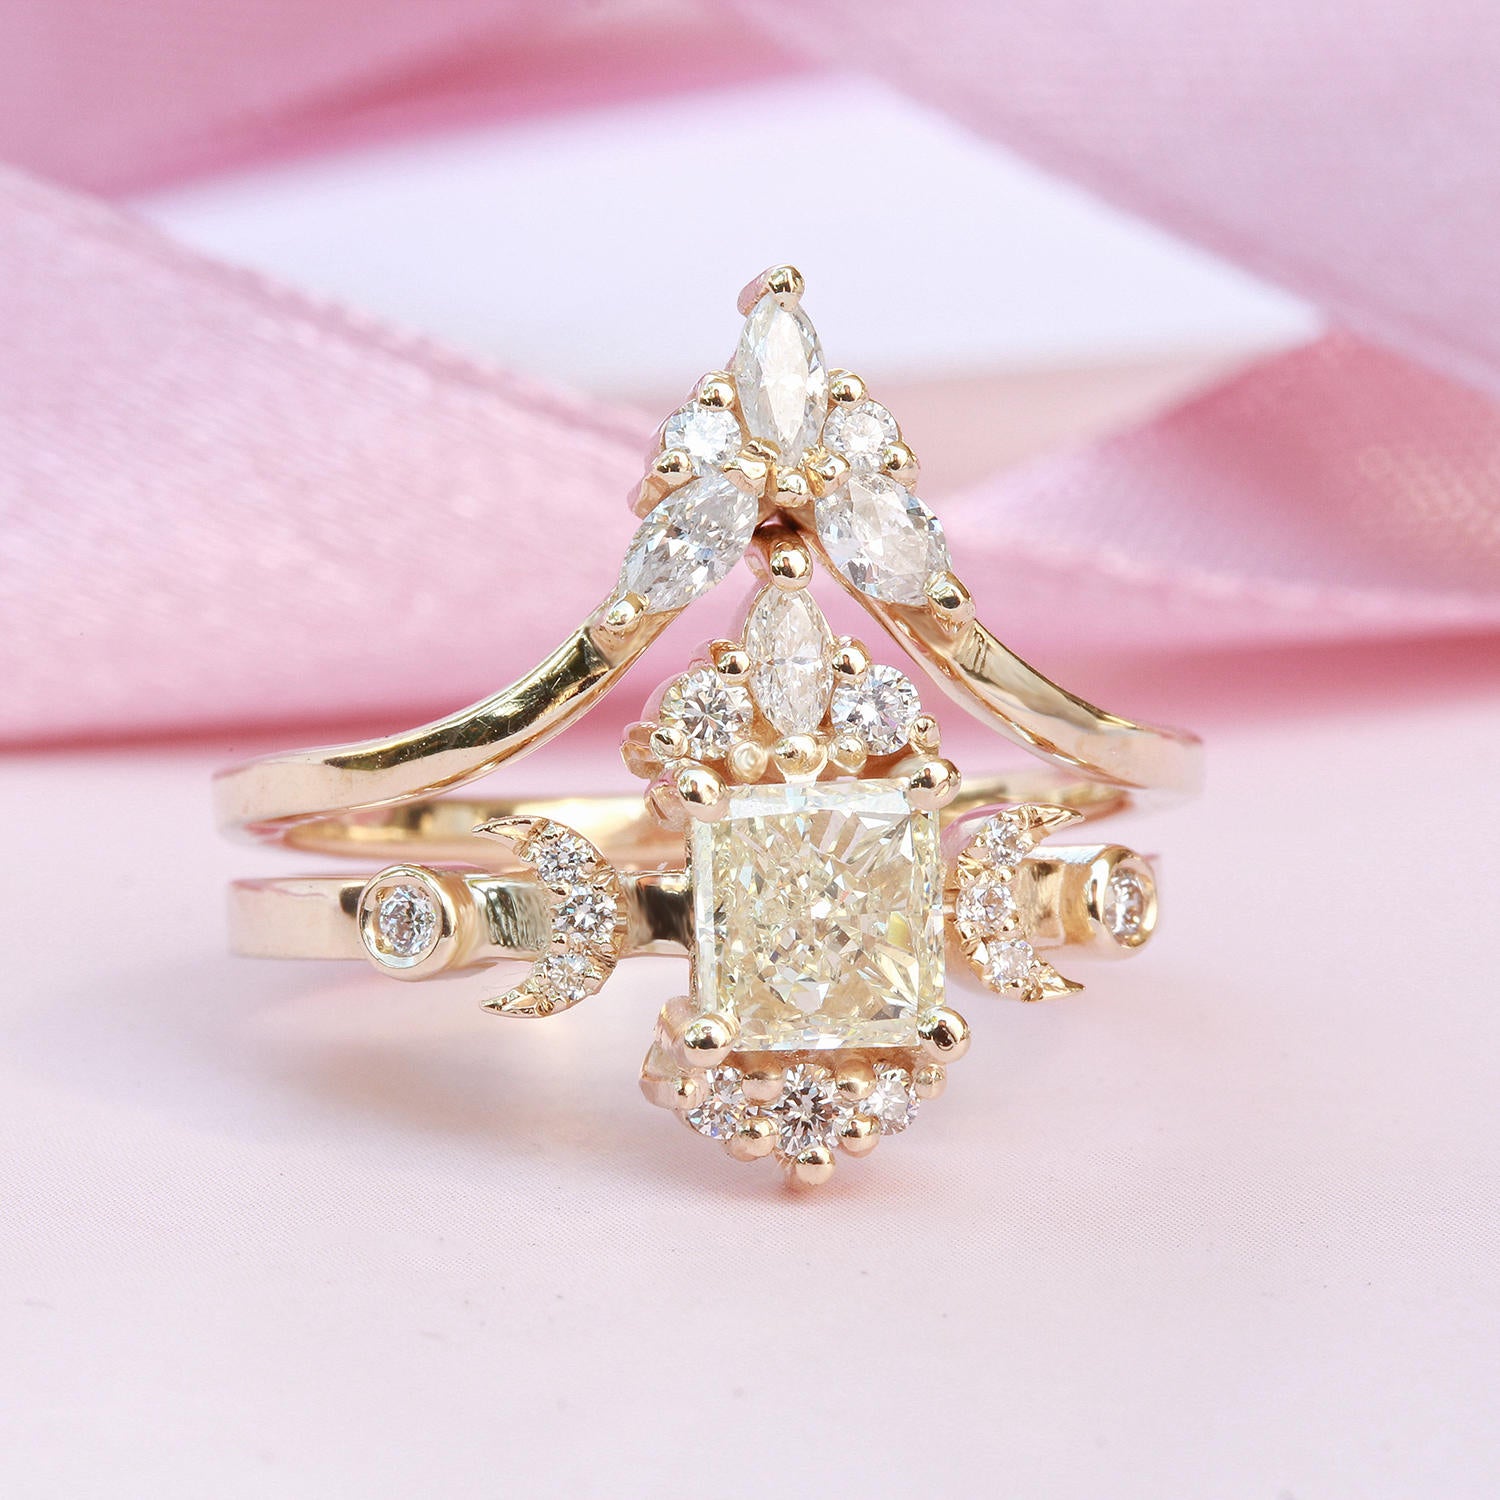 Doorway to Heaven Hindi Moon phase Square Princess Cut Diamond Unique Engagement Ring - sillyshinydiamonds